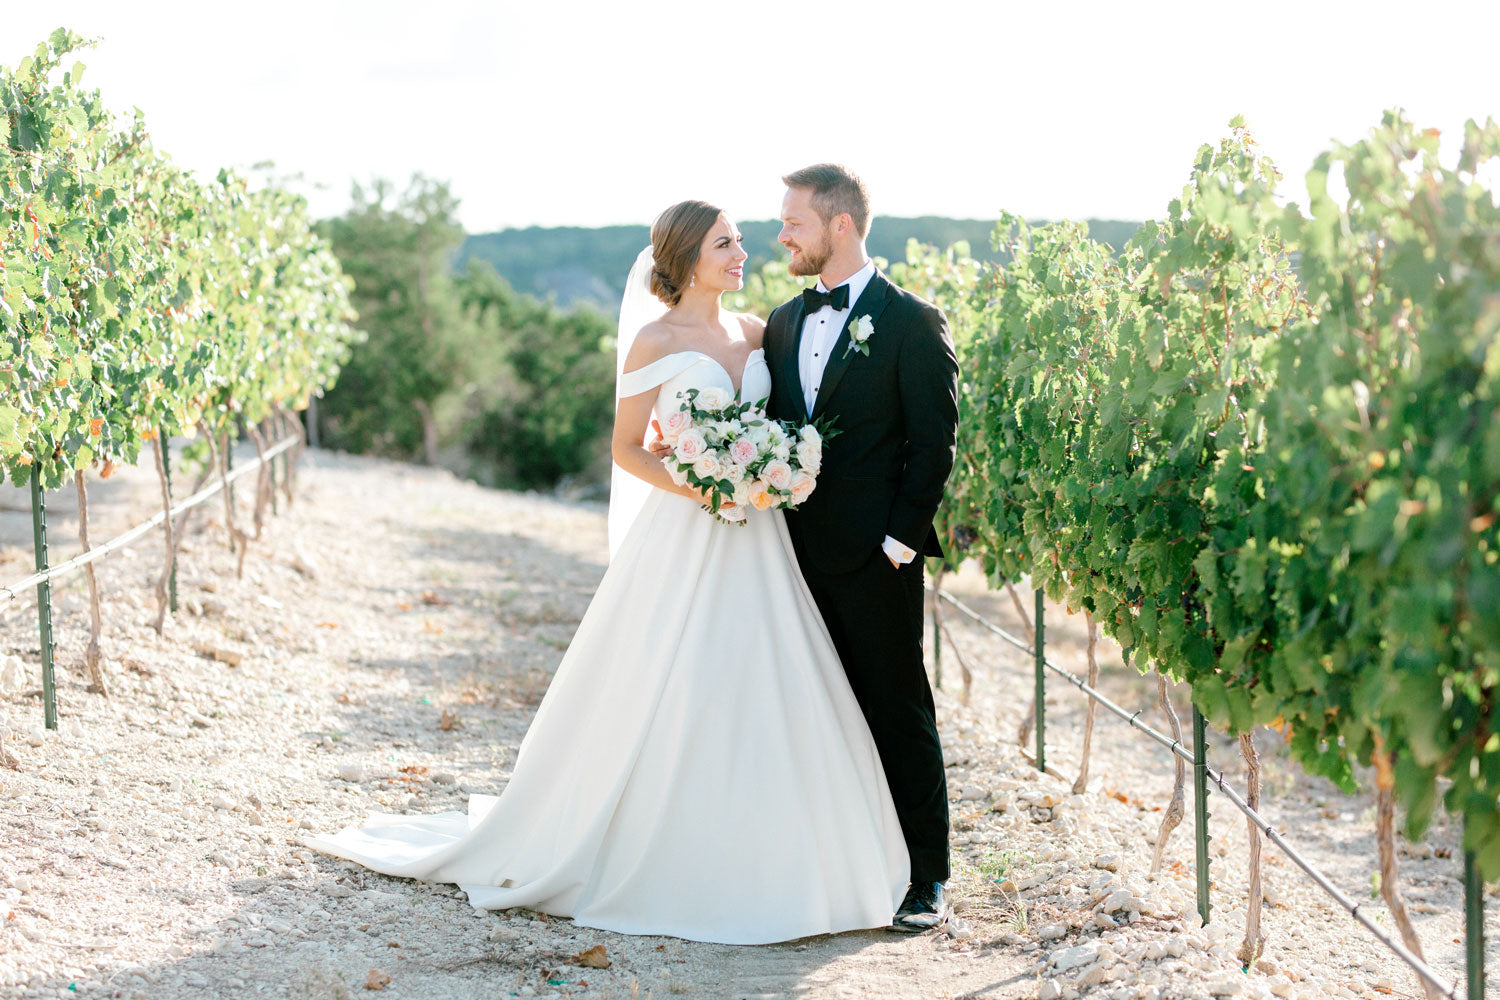 Lexi + Garrett's Gorgeous Vineyard Wedding